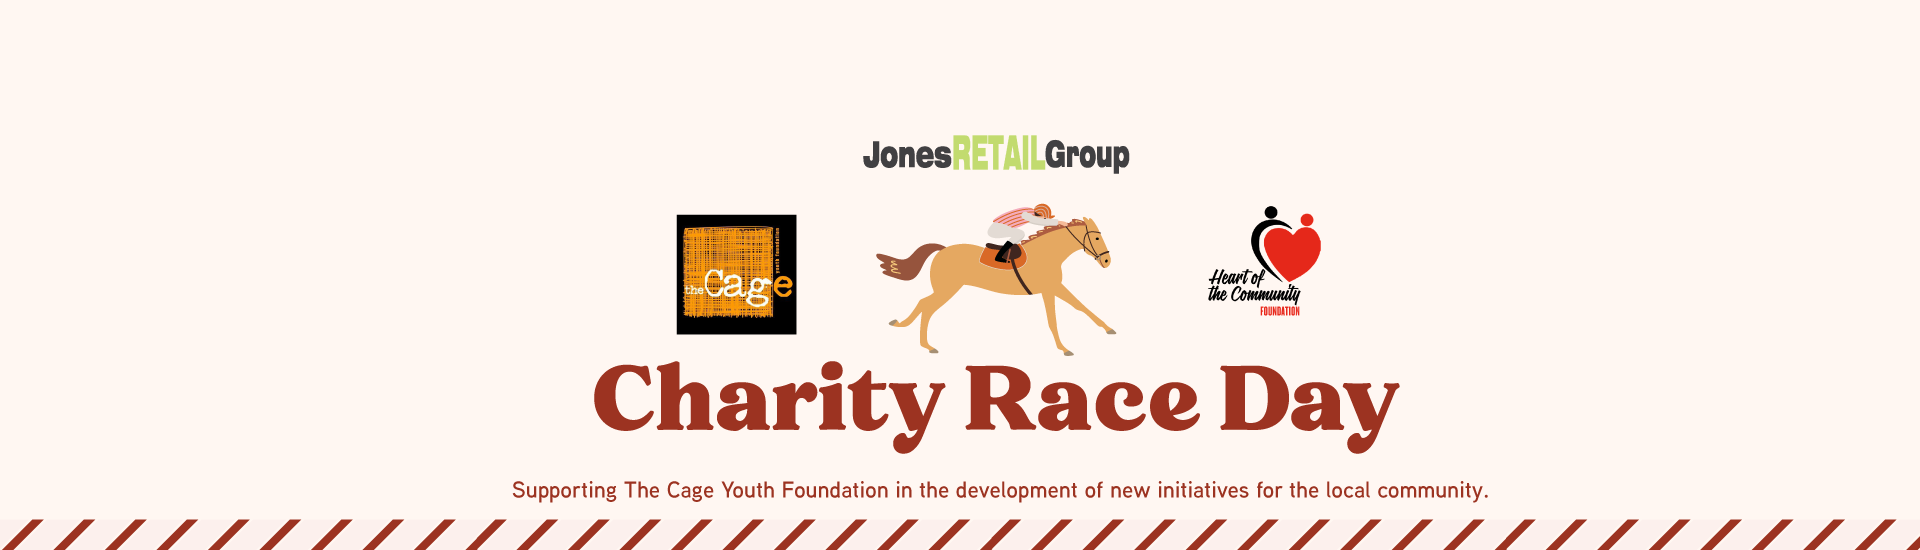 240420_JRG_Charity-Raceday_1920x550_2